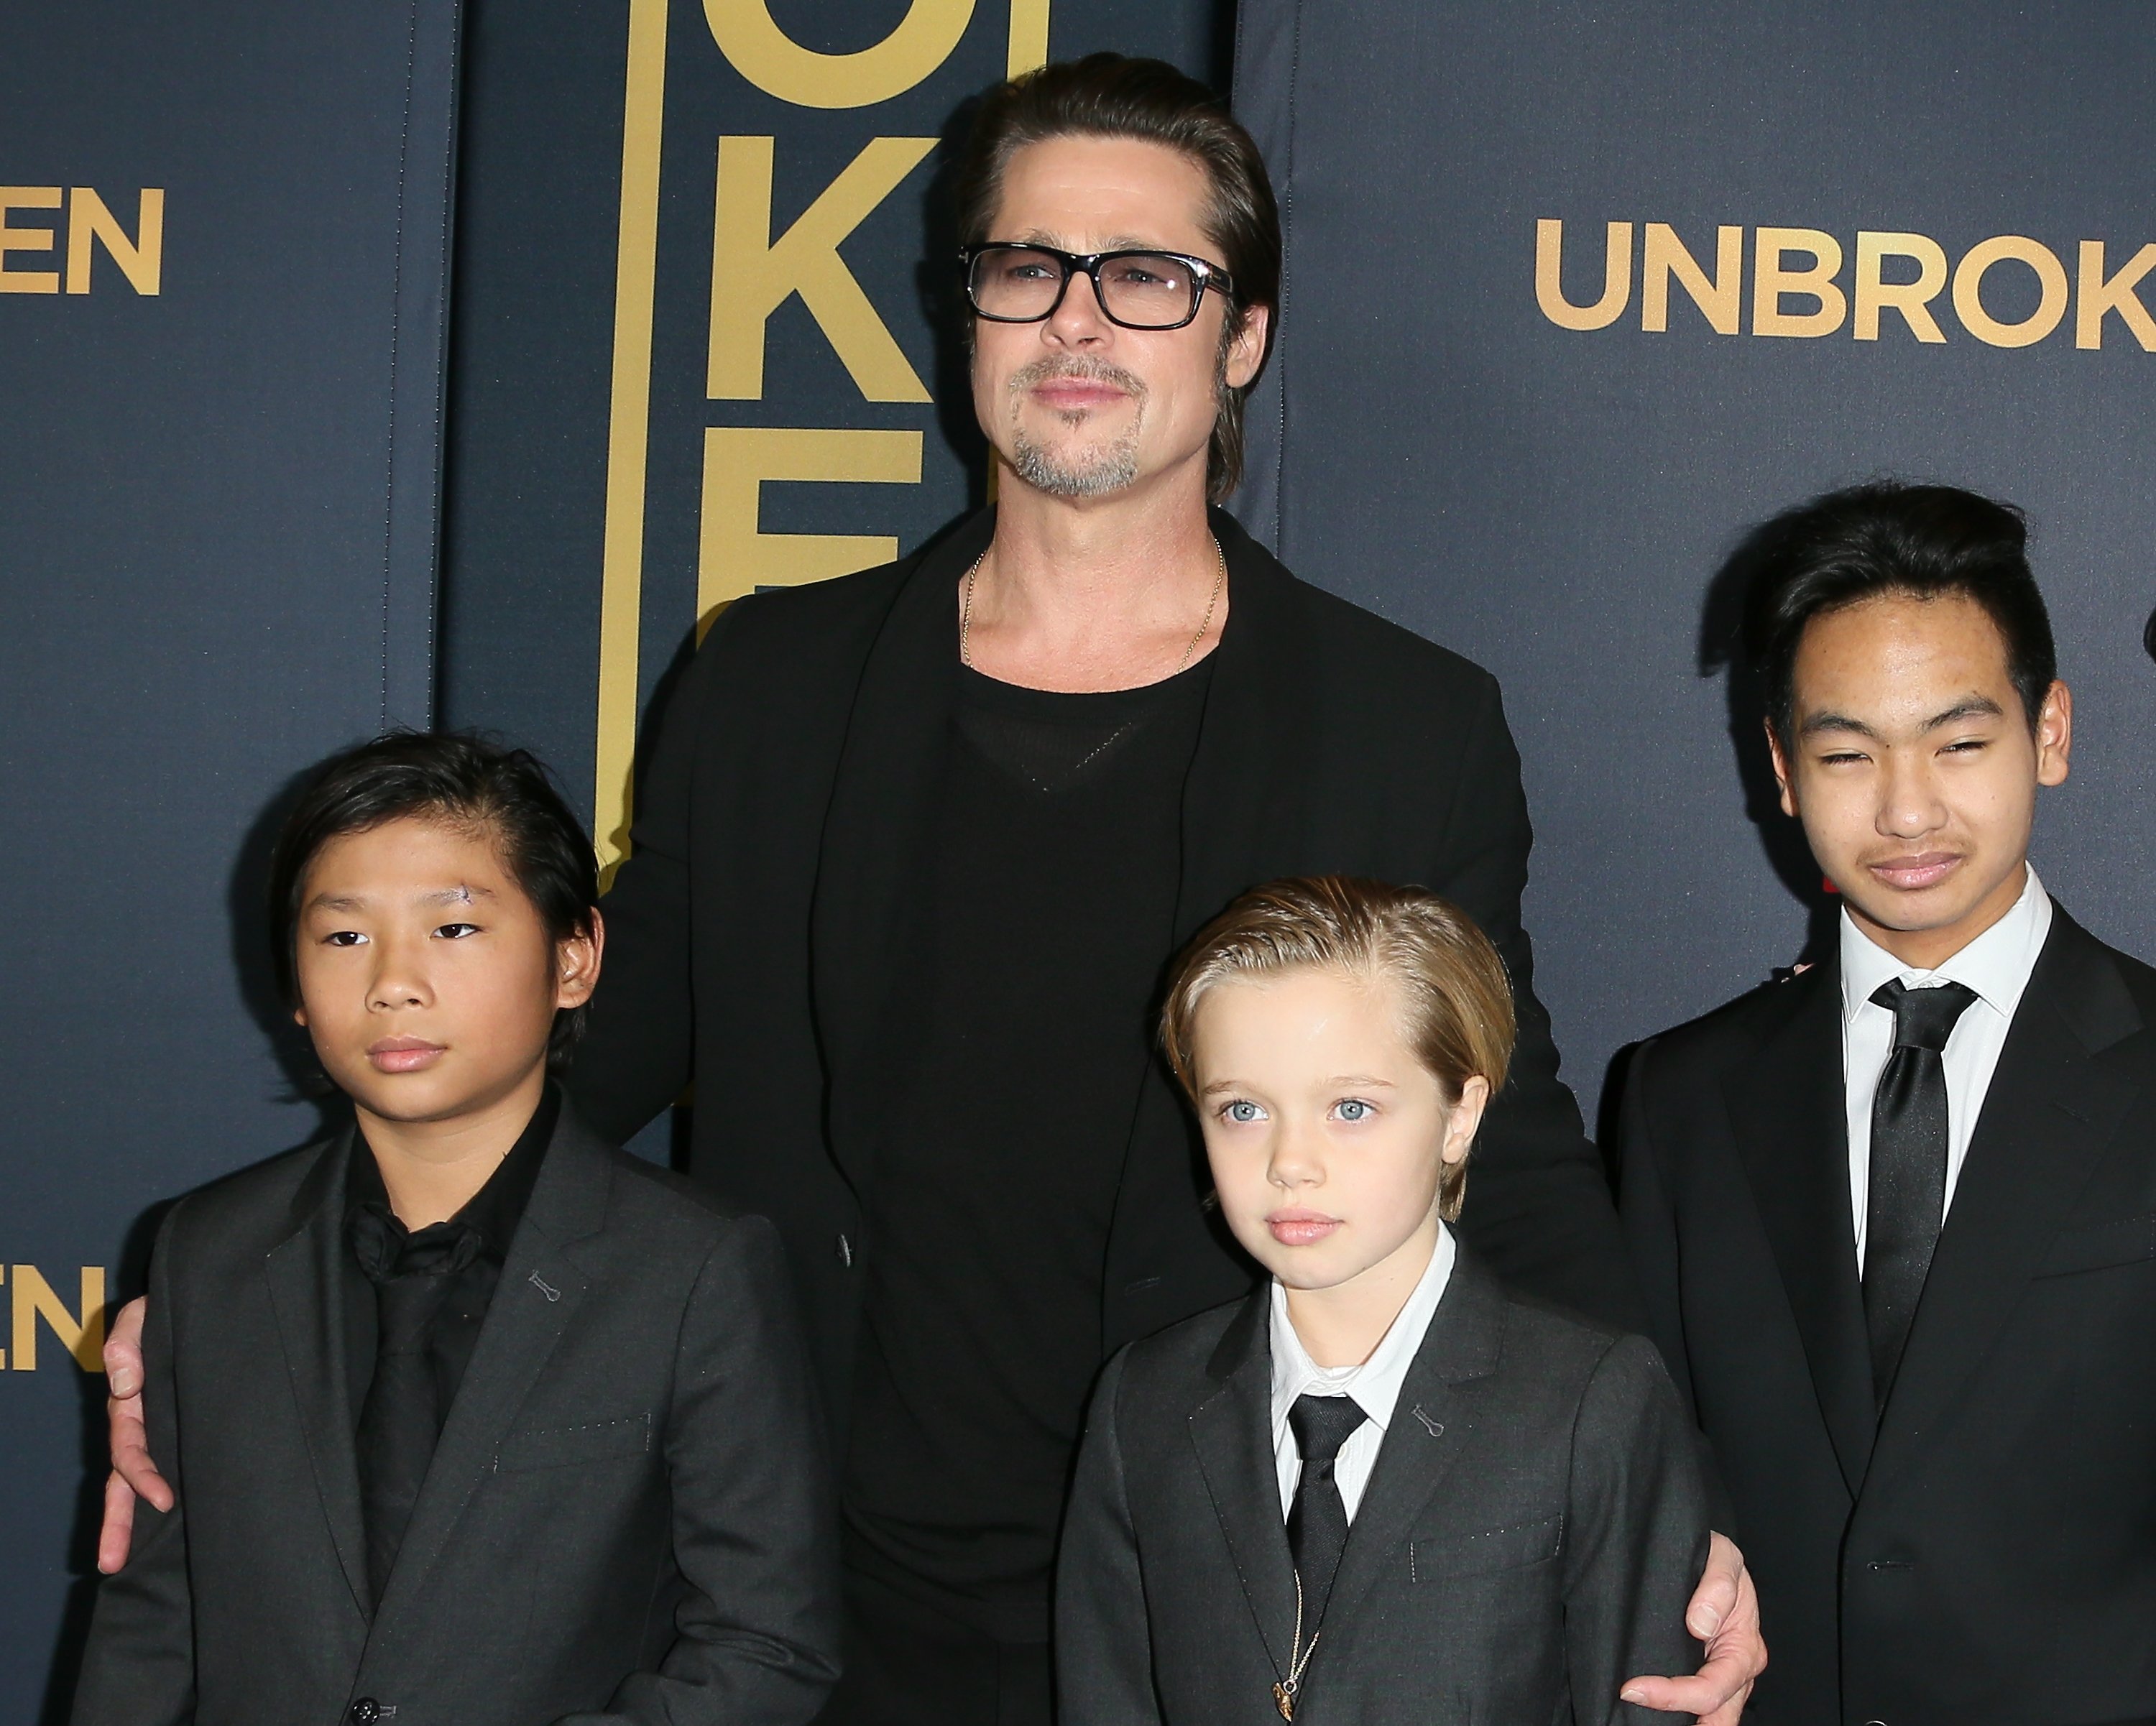 Brad Pitt, Pax Thien Jolie-Pitt, Shiloh Nouvel Jolie-Pitt and Maddox Jolie-Pitt attend the 